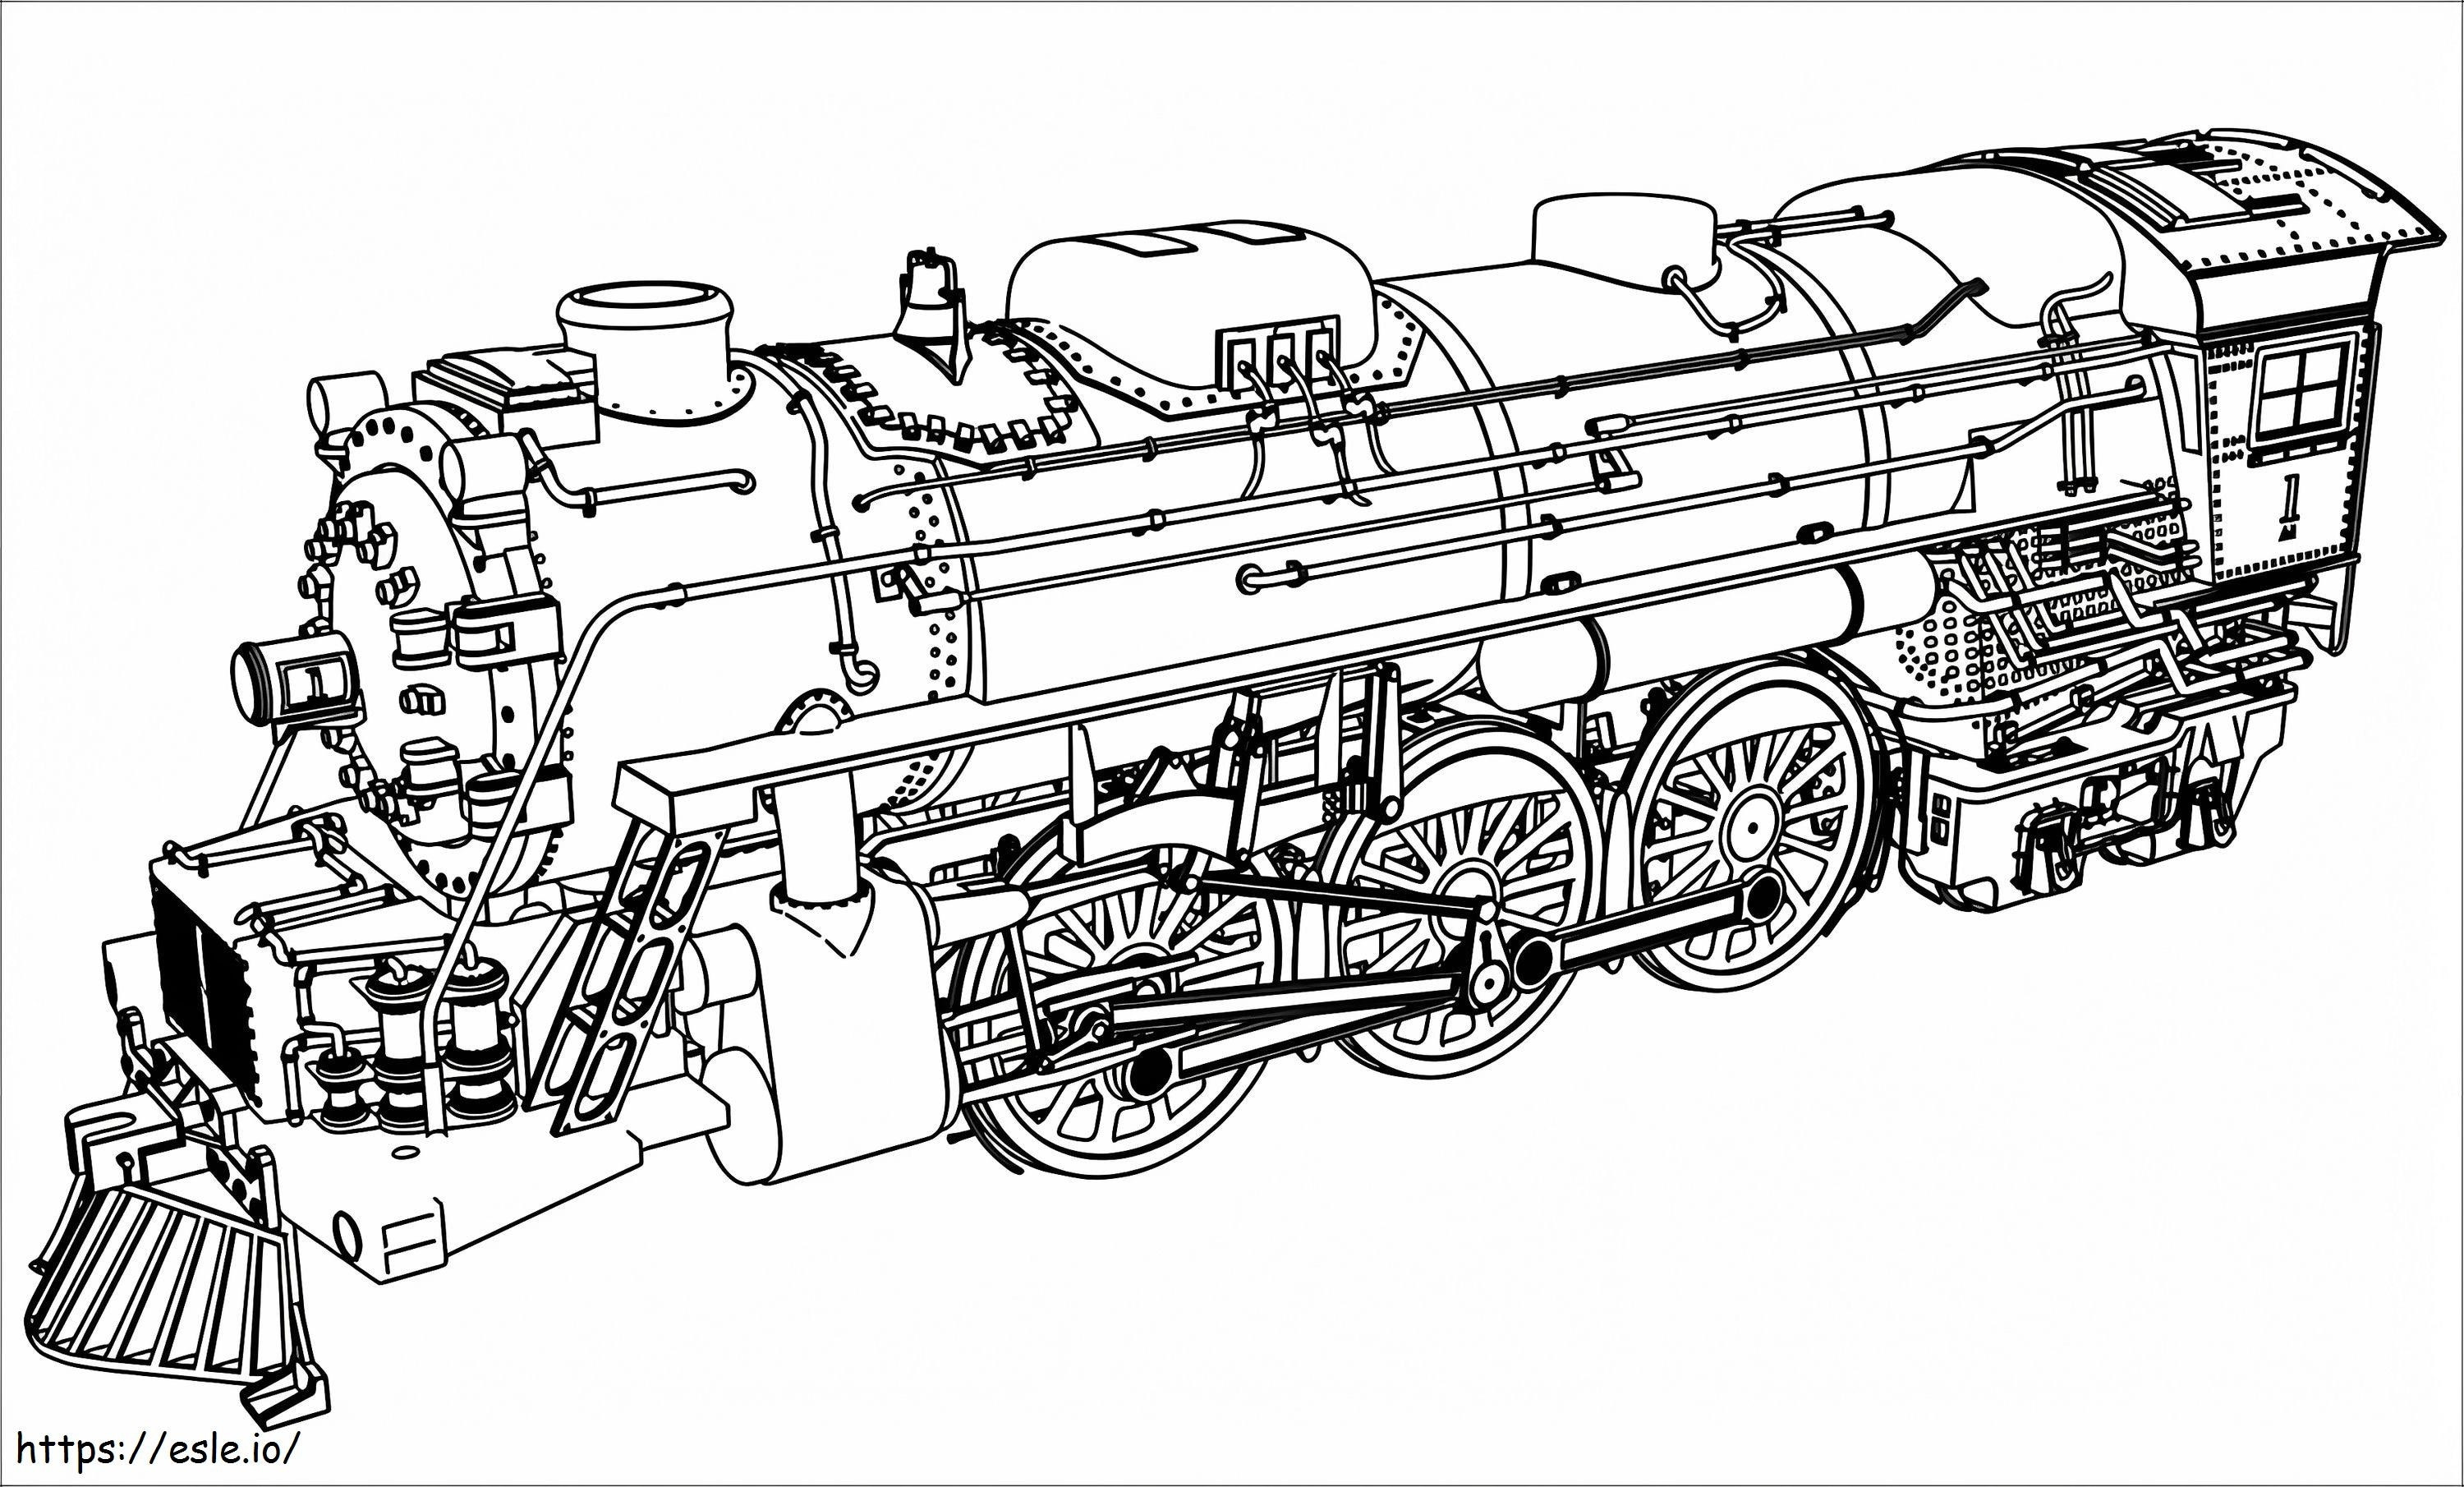 Coloriage Locomotive compliquée à imprimer dessin